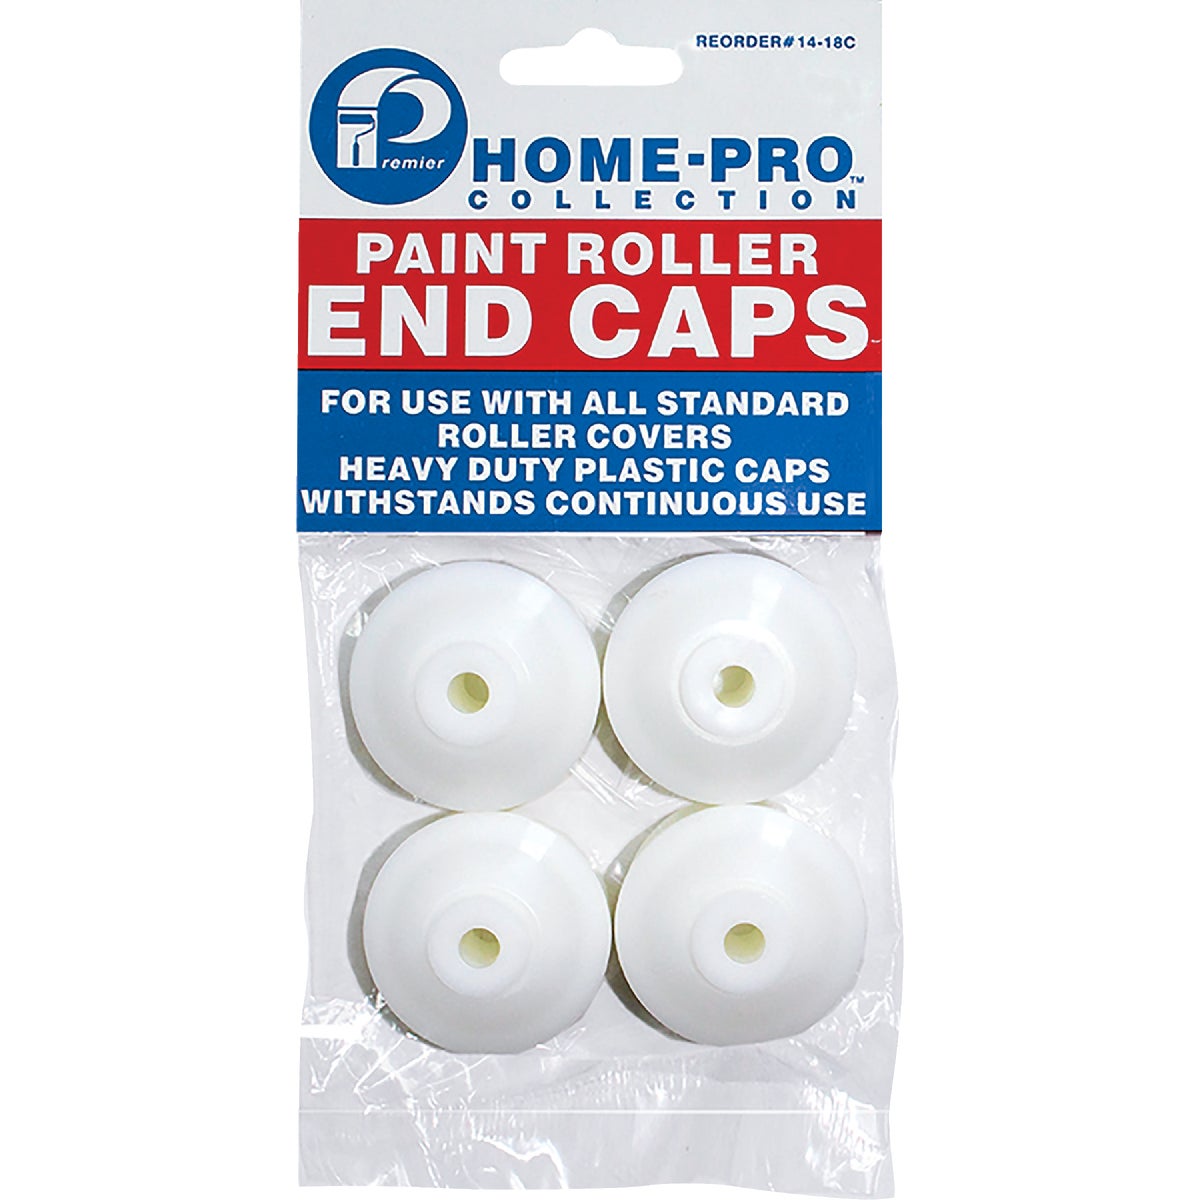 Premier Home-Pro 1-1/2 In. Plastic Paint Roller End Caps (4-Pack)